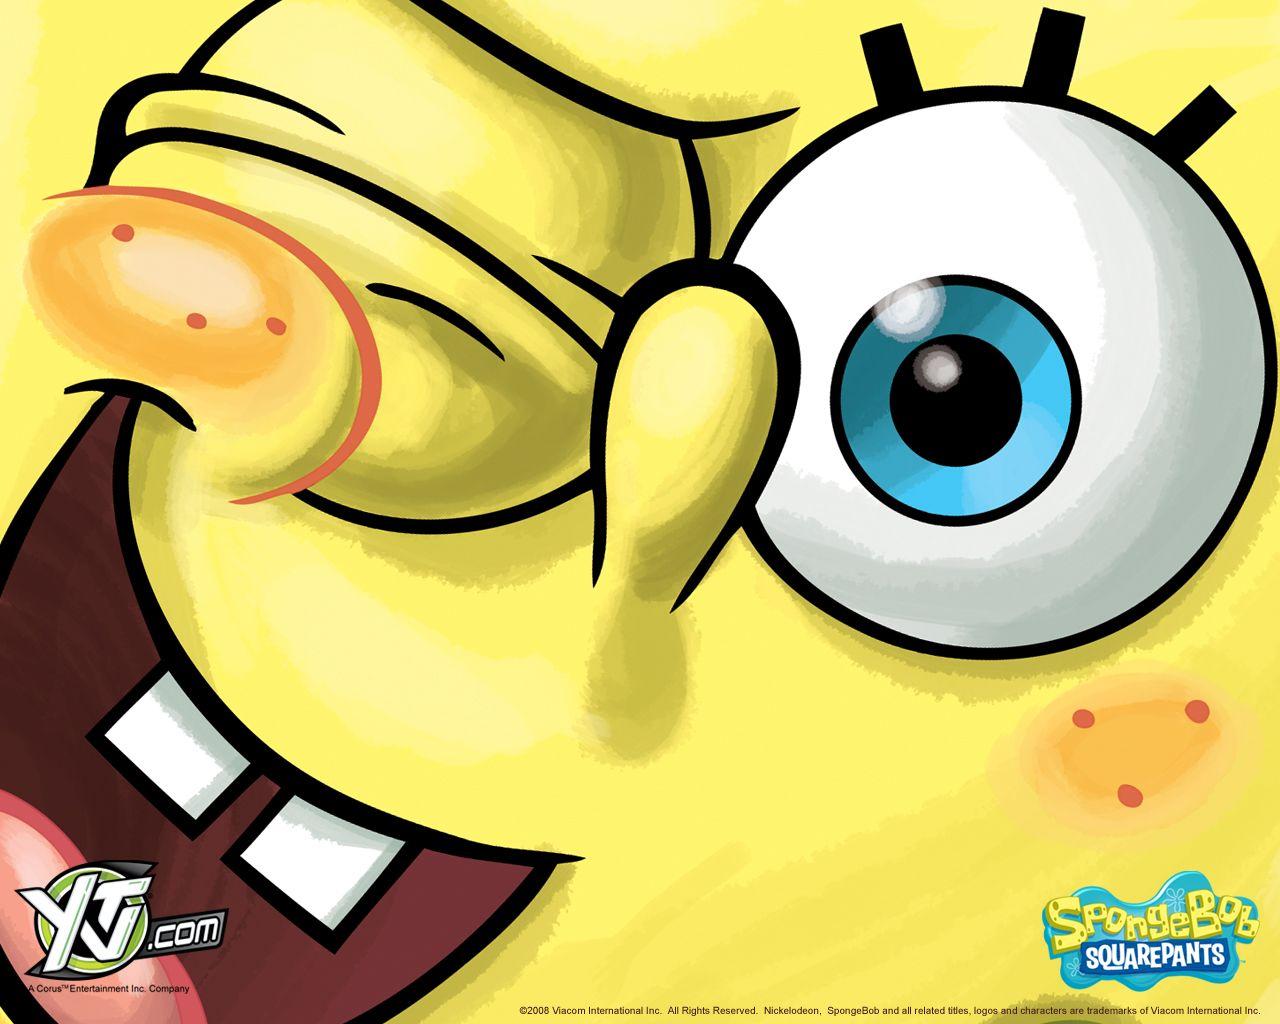 Best image about SpongeBob SquarePants. Bobs